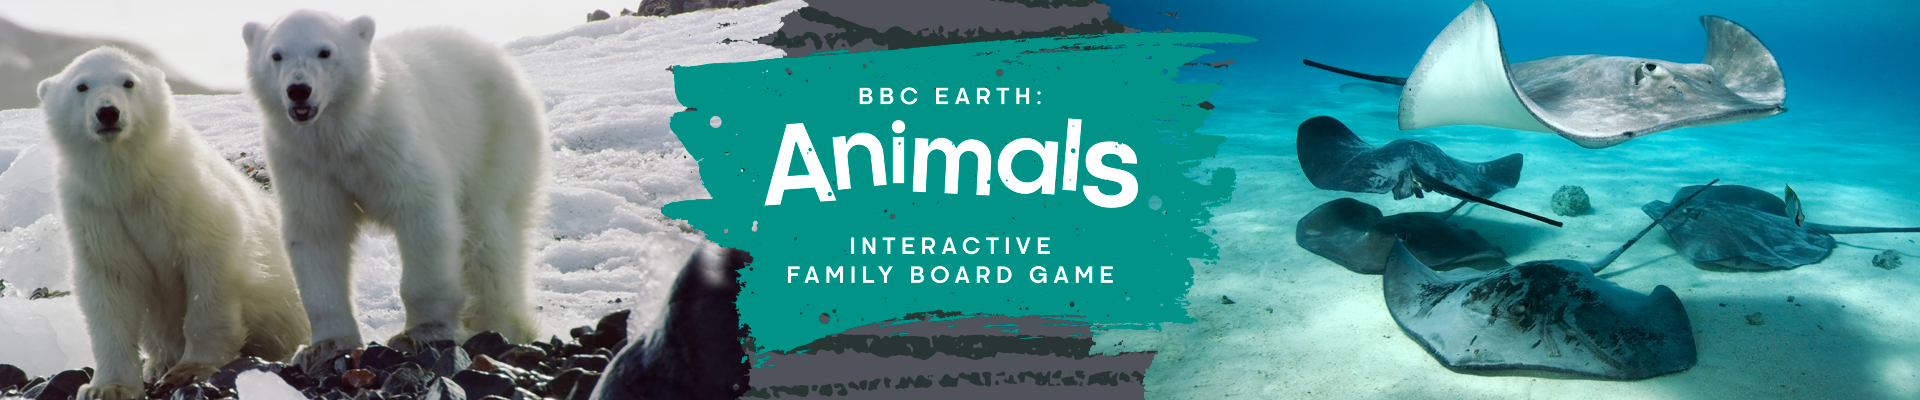 BBC Earth: Animals